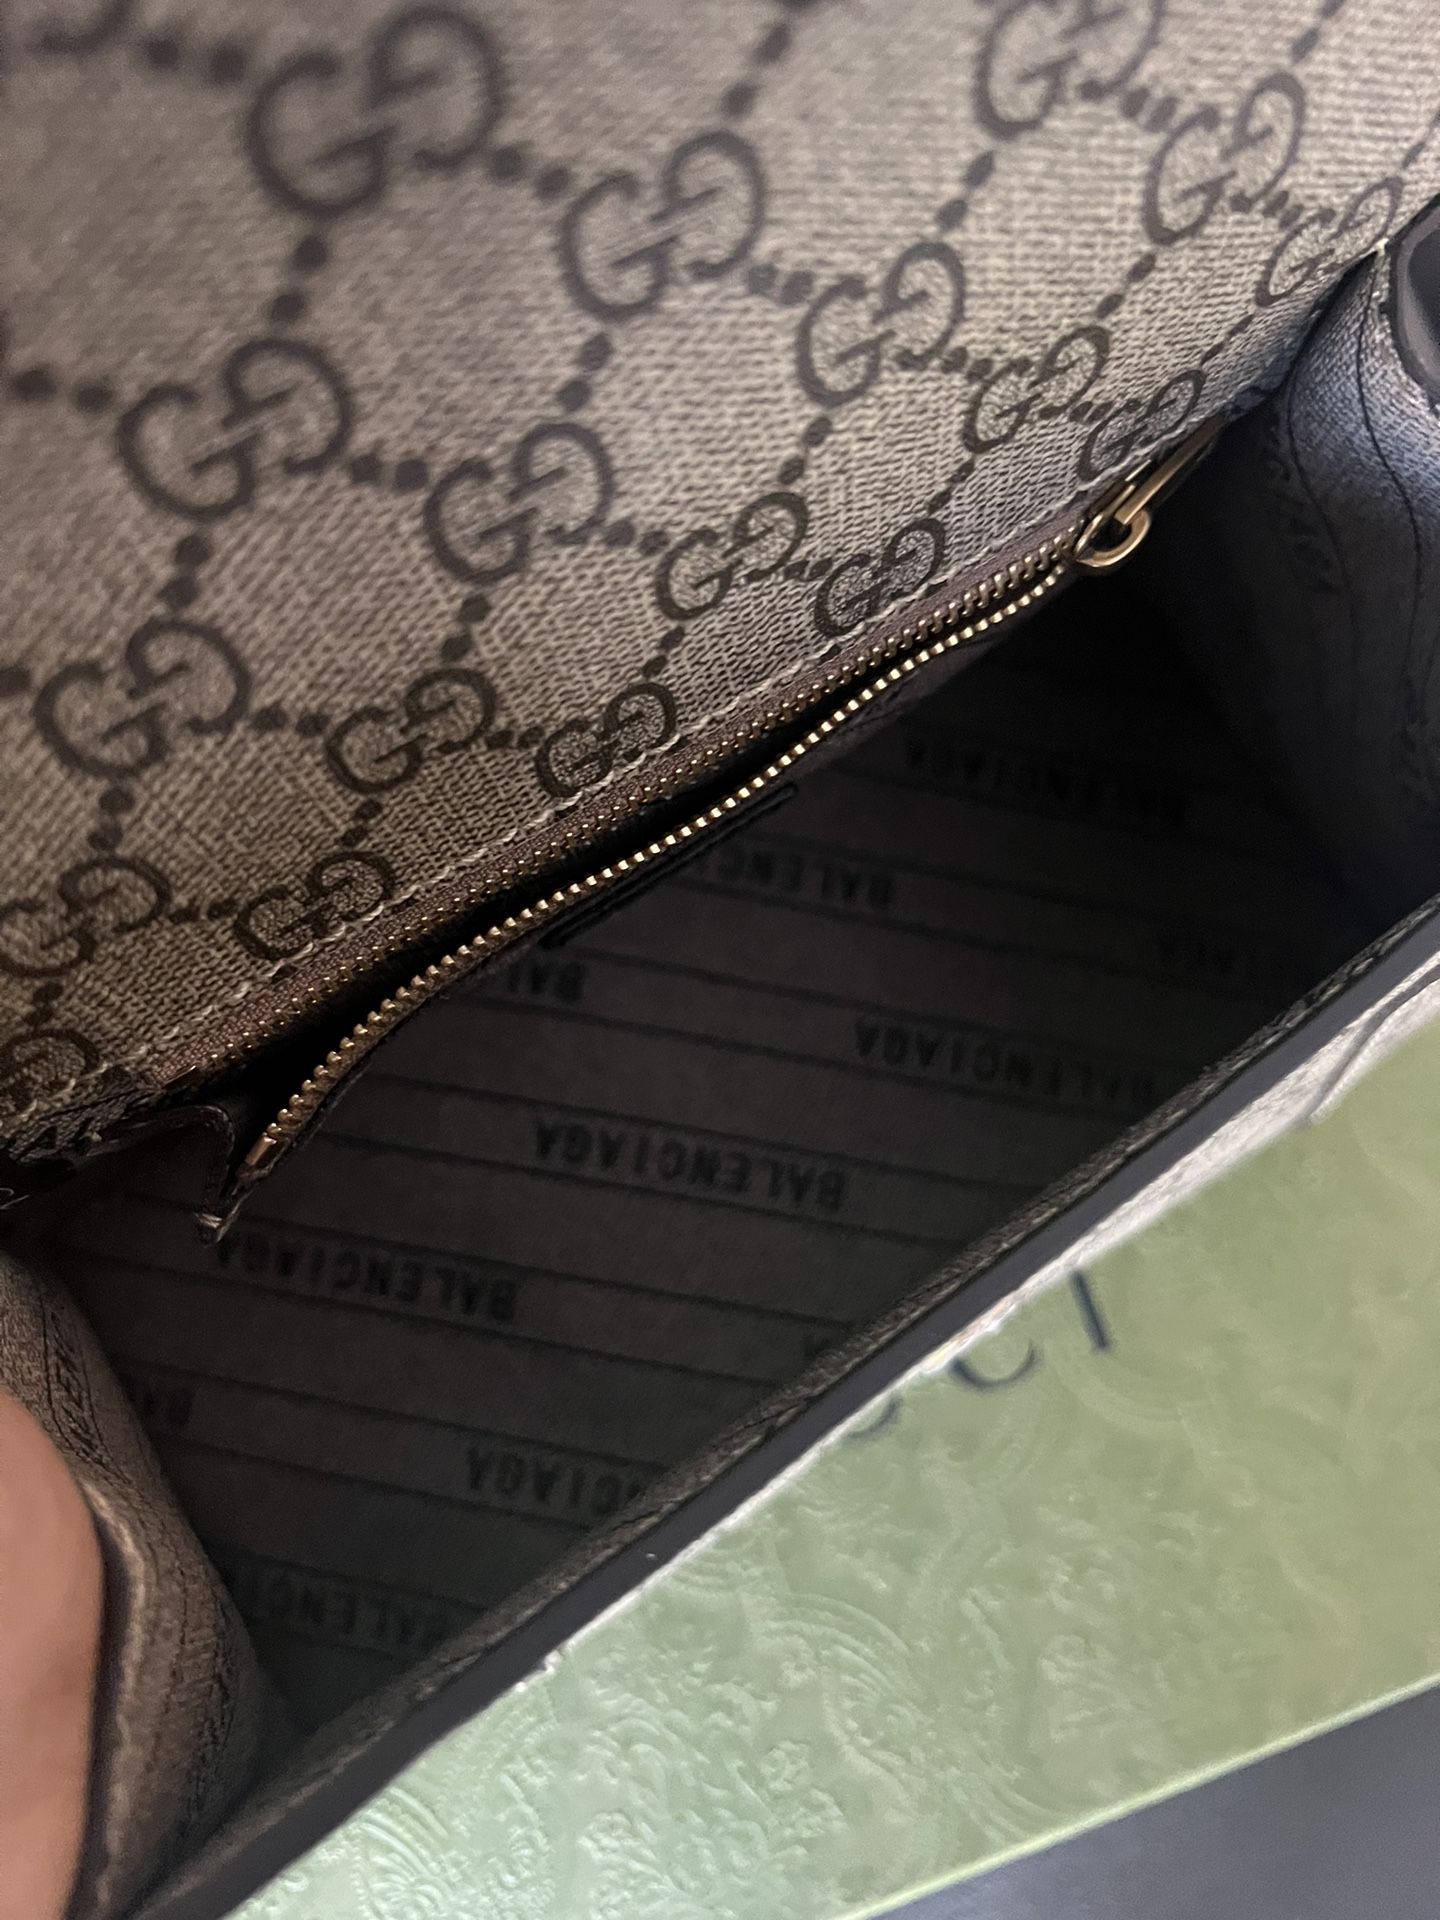 Gucci/Balenciaga Hourglass bag. for Sale in Decatur, GA - OfferUp